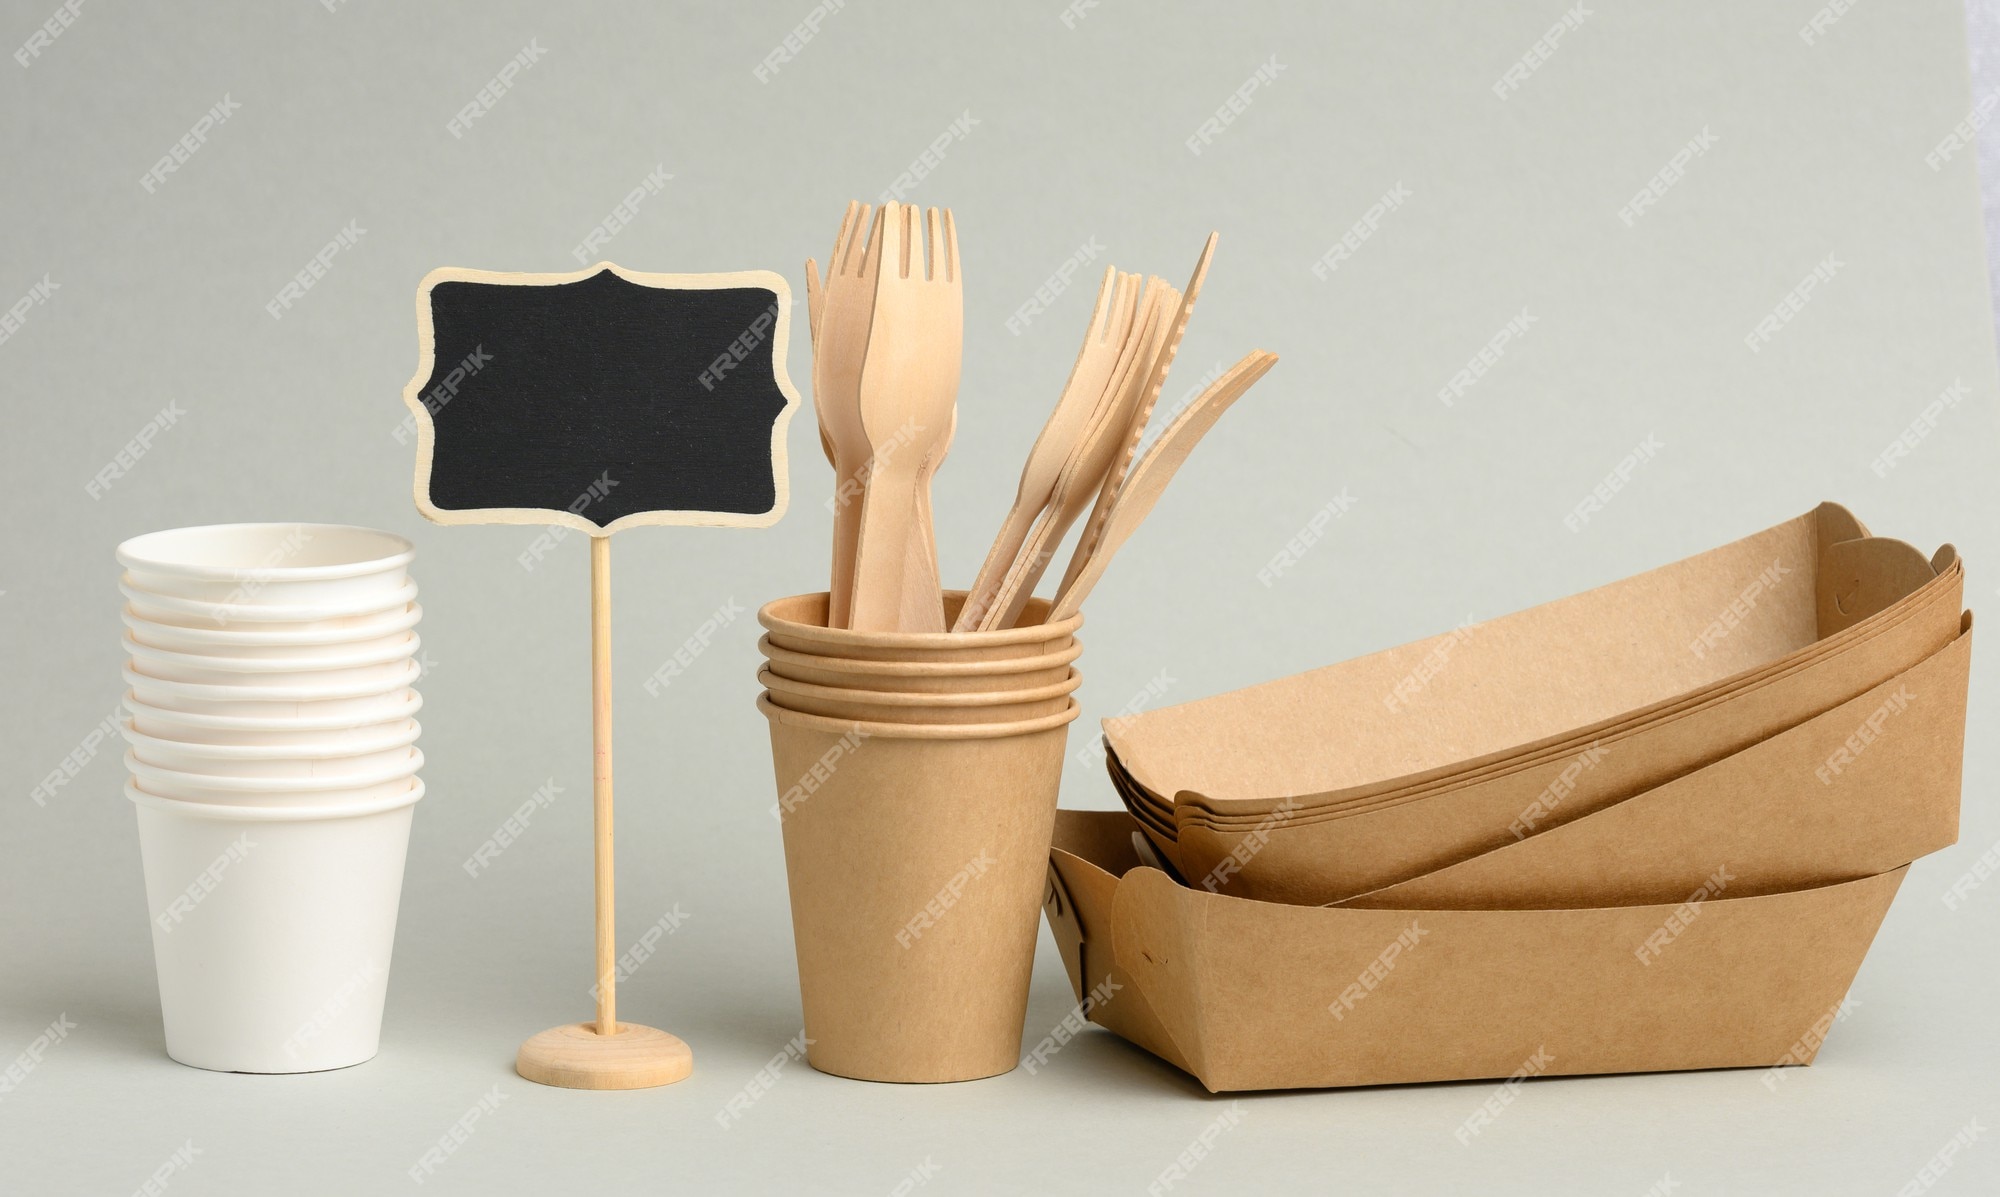 https://img.freepik.com/premium-photo/disposable-brown-white-paper-cups-rectangular-plates-wooden-forks-gray-surface-zero-waste-no-plastic_116441-17803.jpg?w=2000